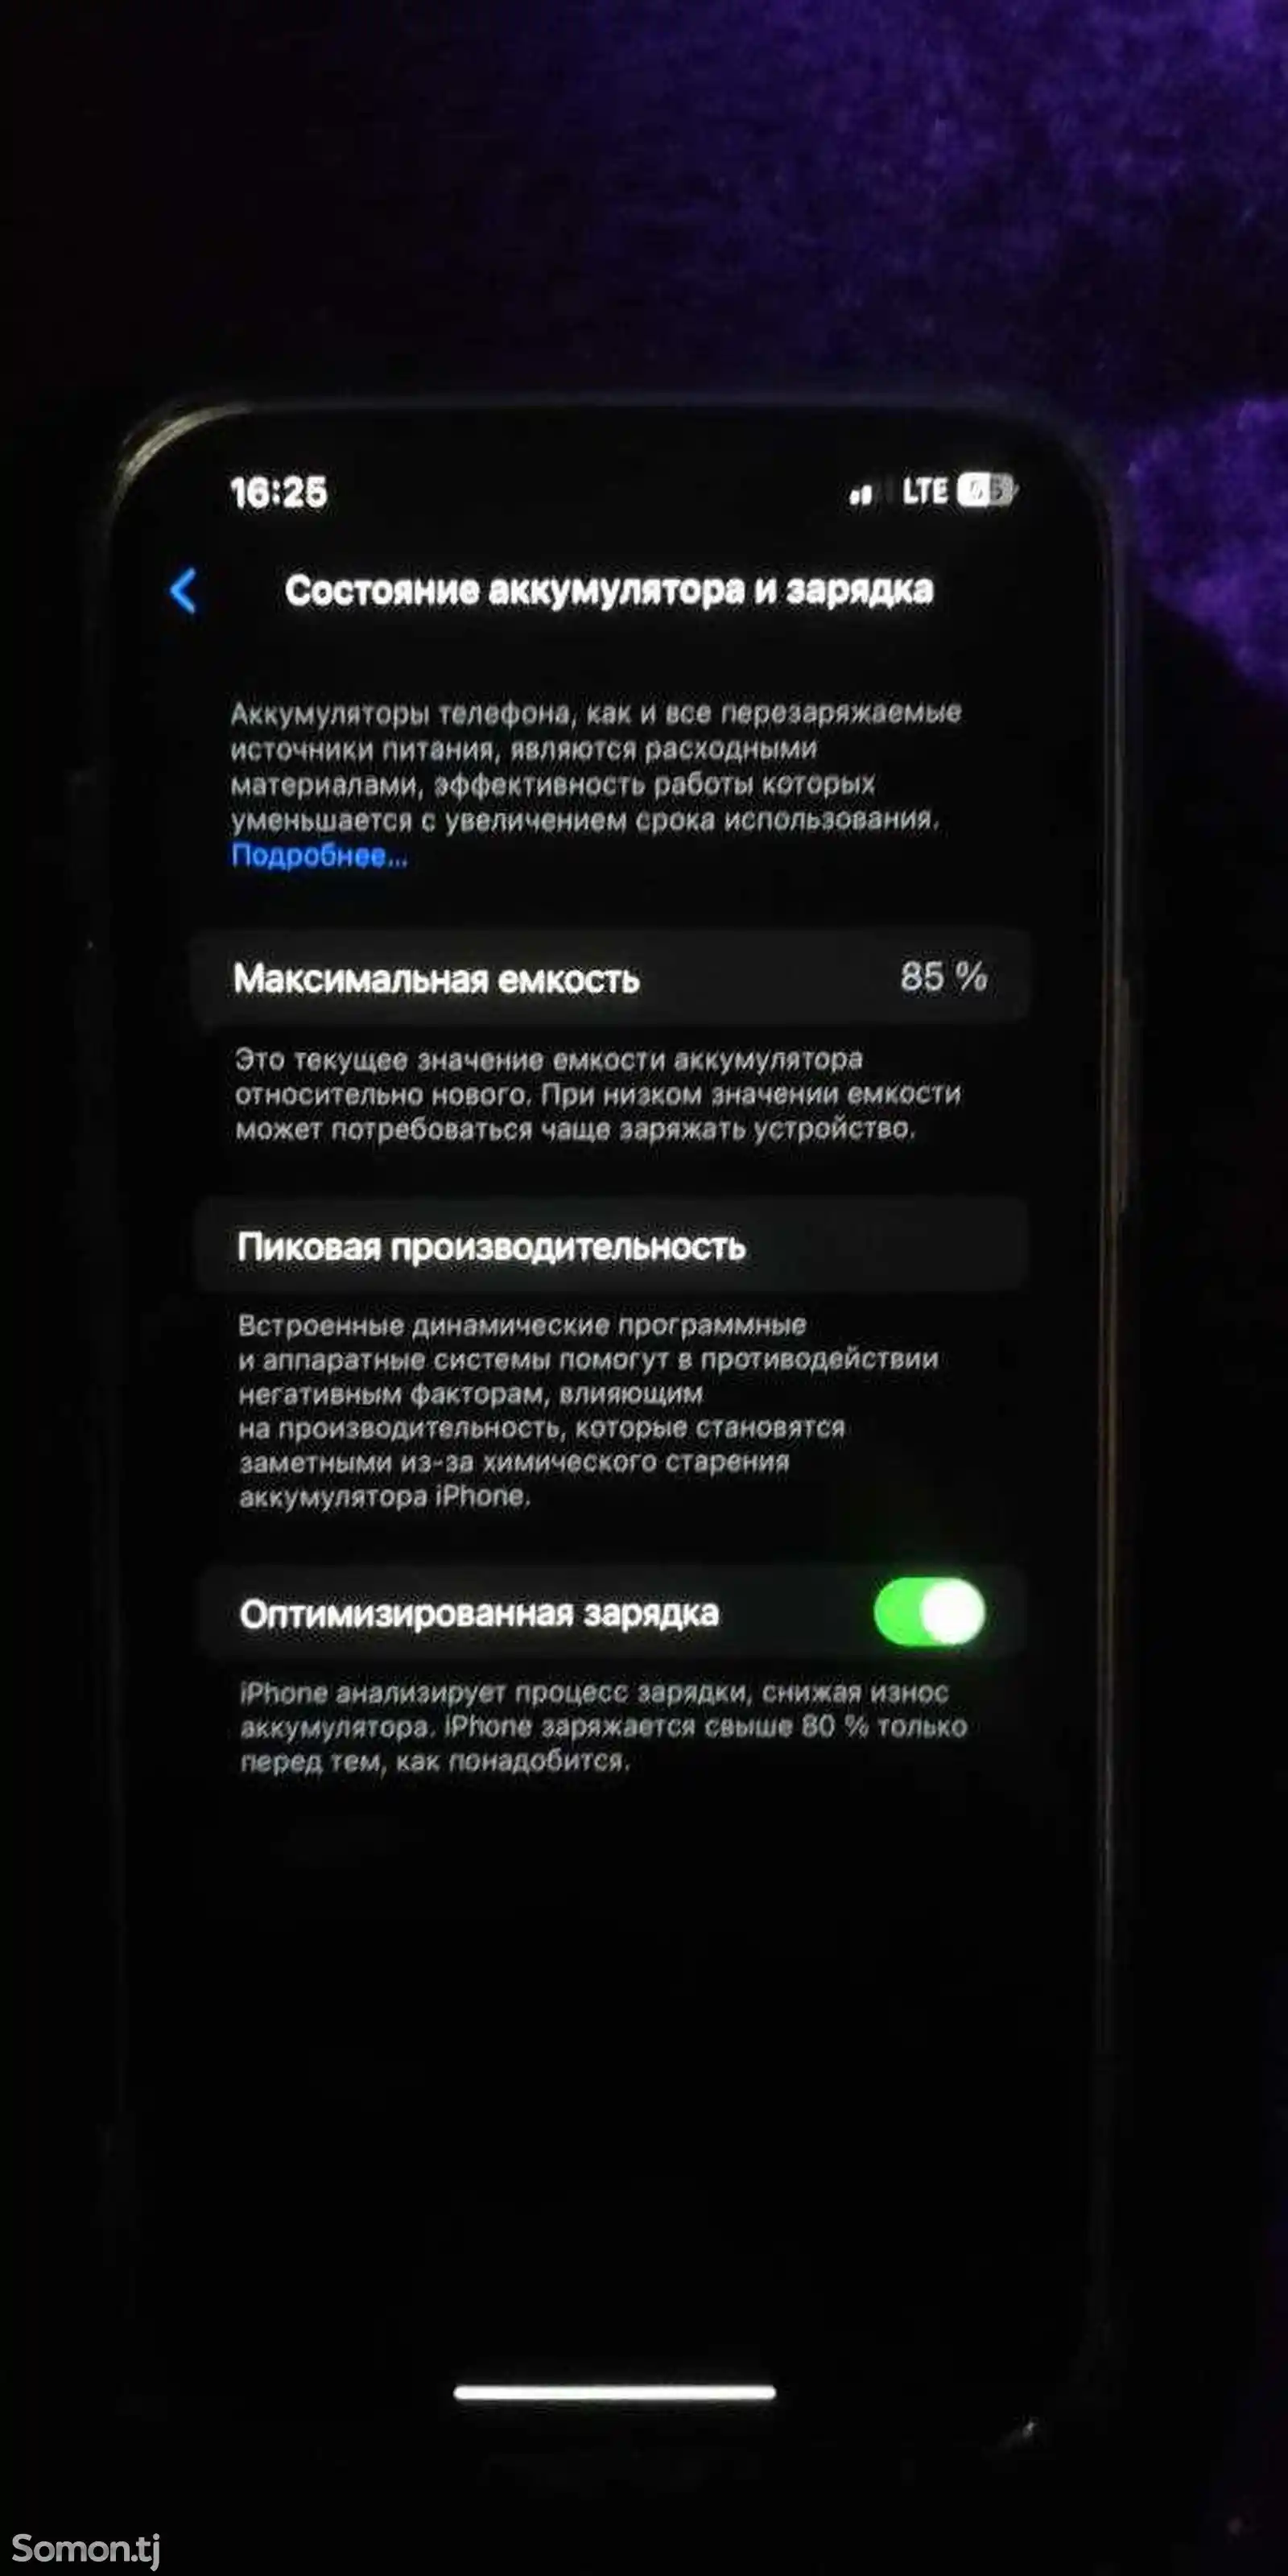 Apple iPhone 12 Pro Max, 256 gb, Silver-1